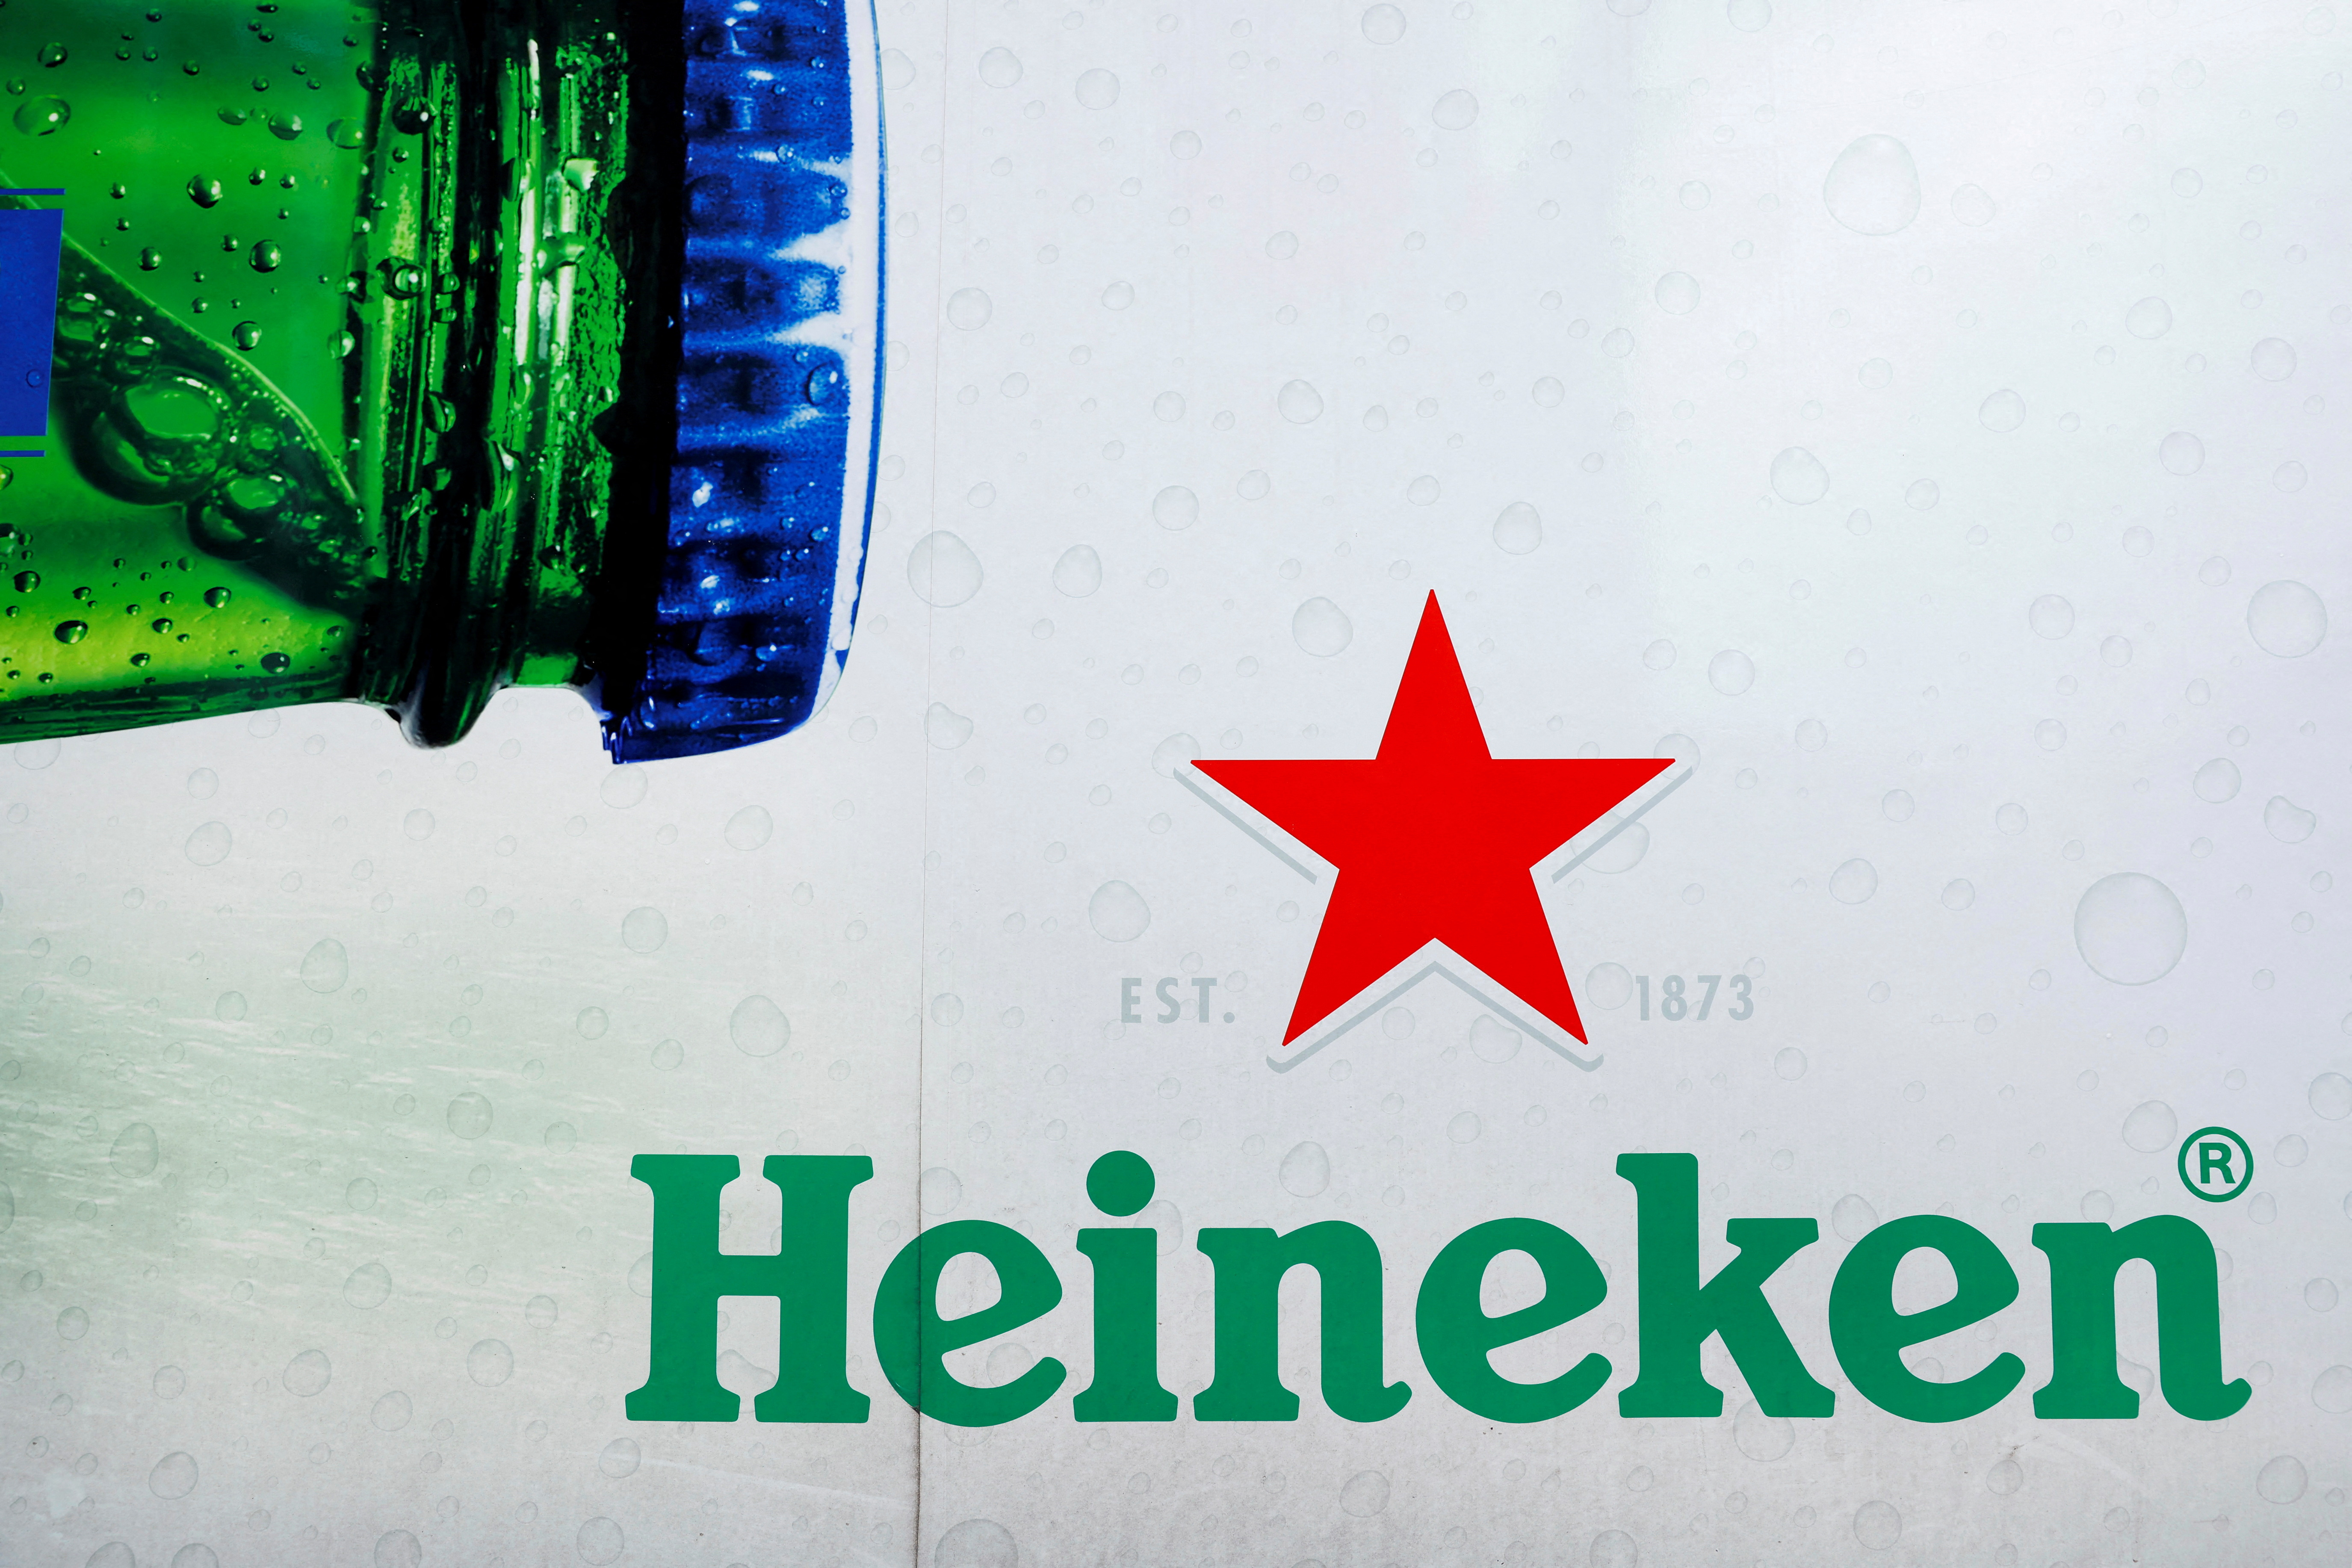 The logo of Heineken beer is seen on a delivery truck